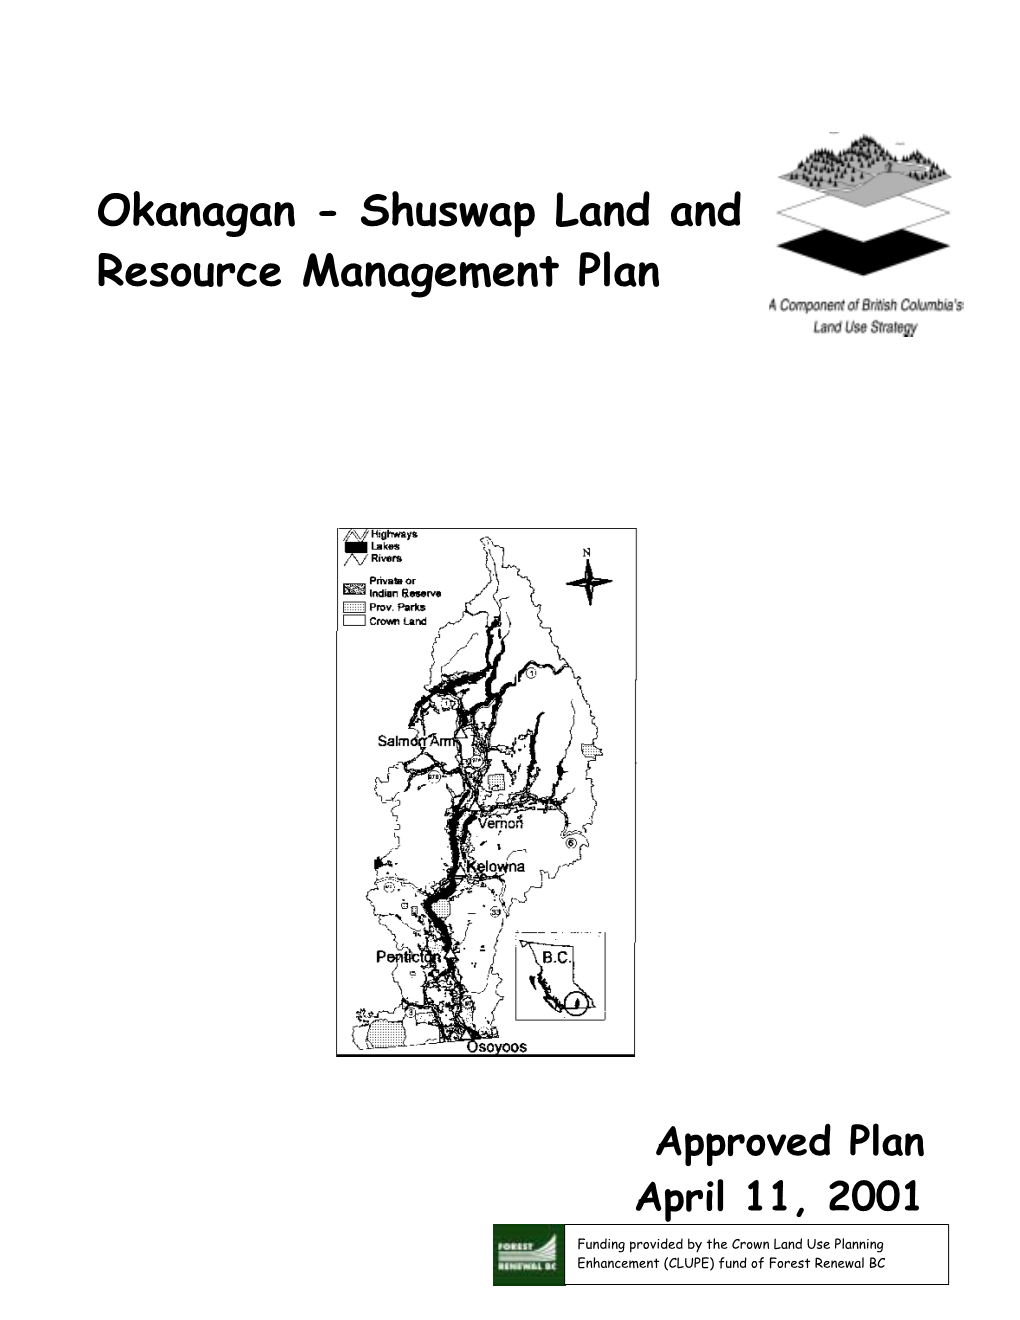 Okanagan-Shuswap LRMP Process (Signature Page Attached)